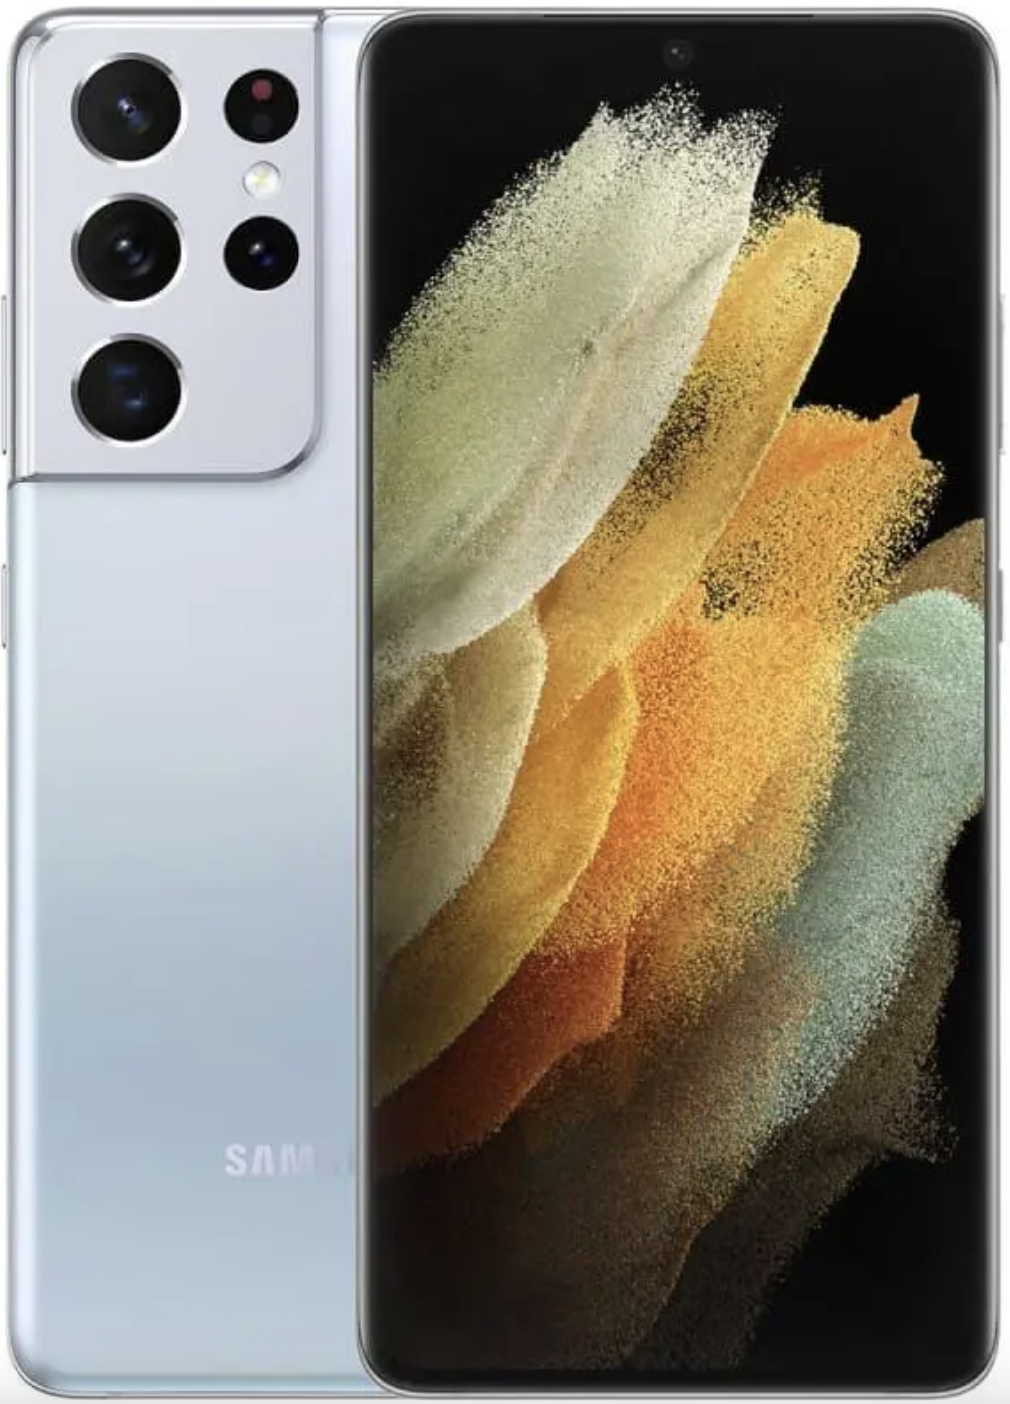 Galaxy S21 Ultra Image